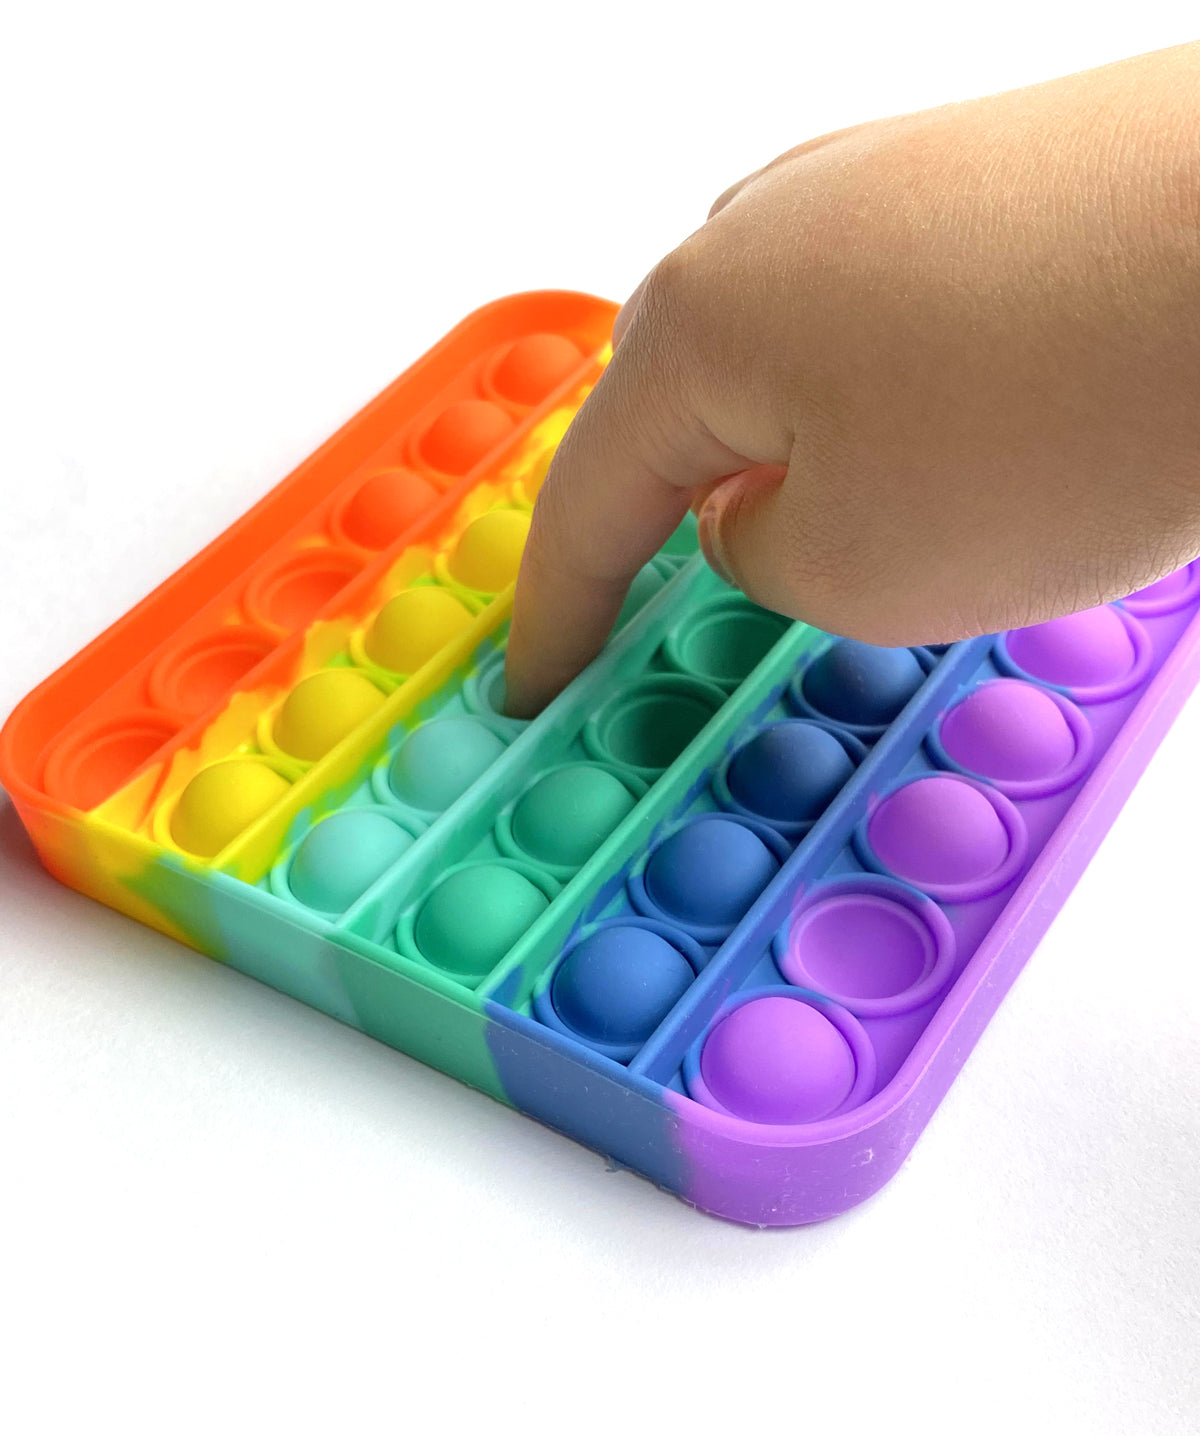 Push Rainbow New Silicone Sensory Fidget Toy Pop Bubble Stress Relief